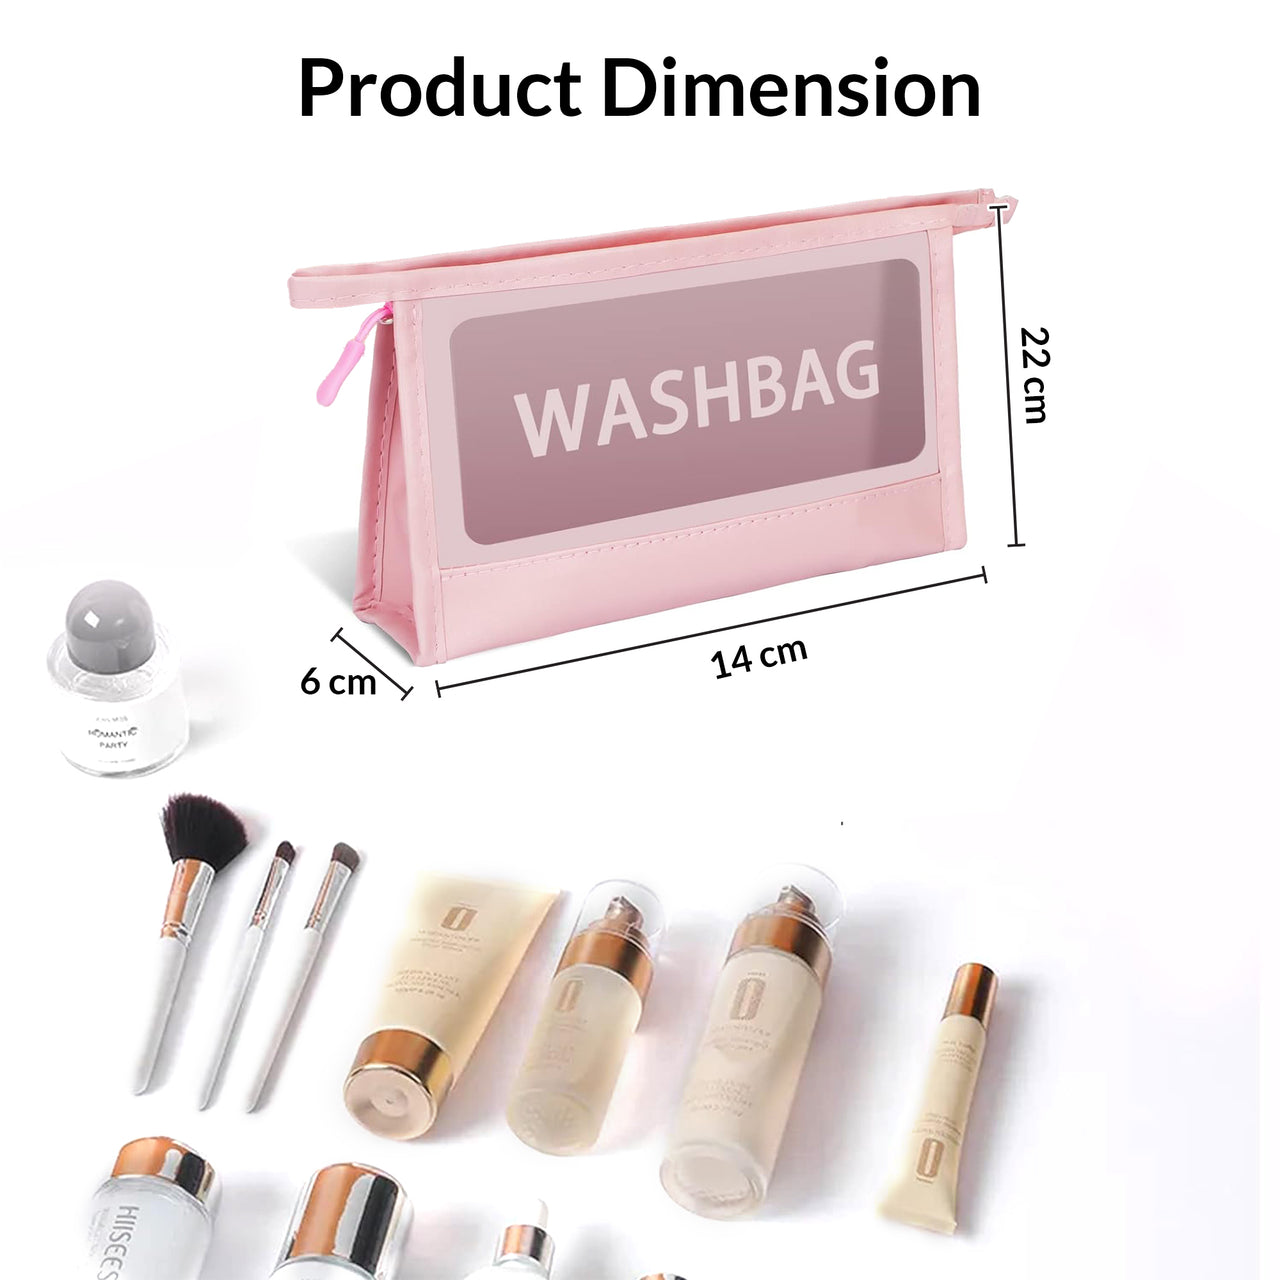 Travel Makeup Toiletries Cosmetic Organizer Pouch | VERSATILE BAG | SMALL SIZE